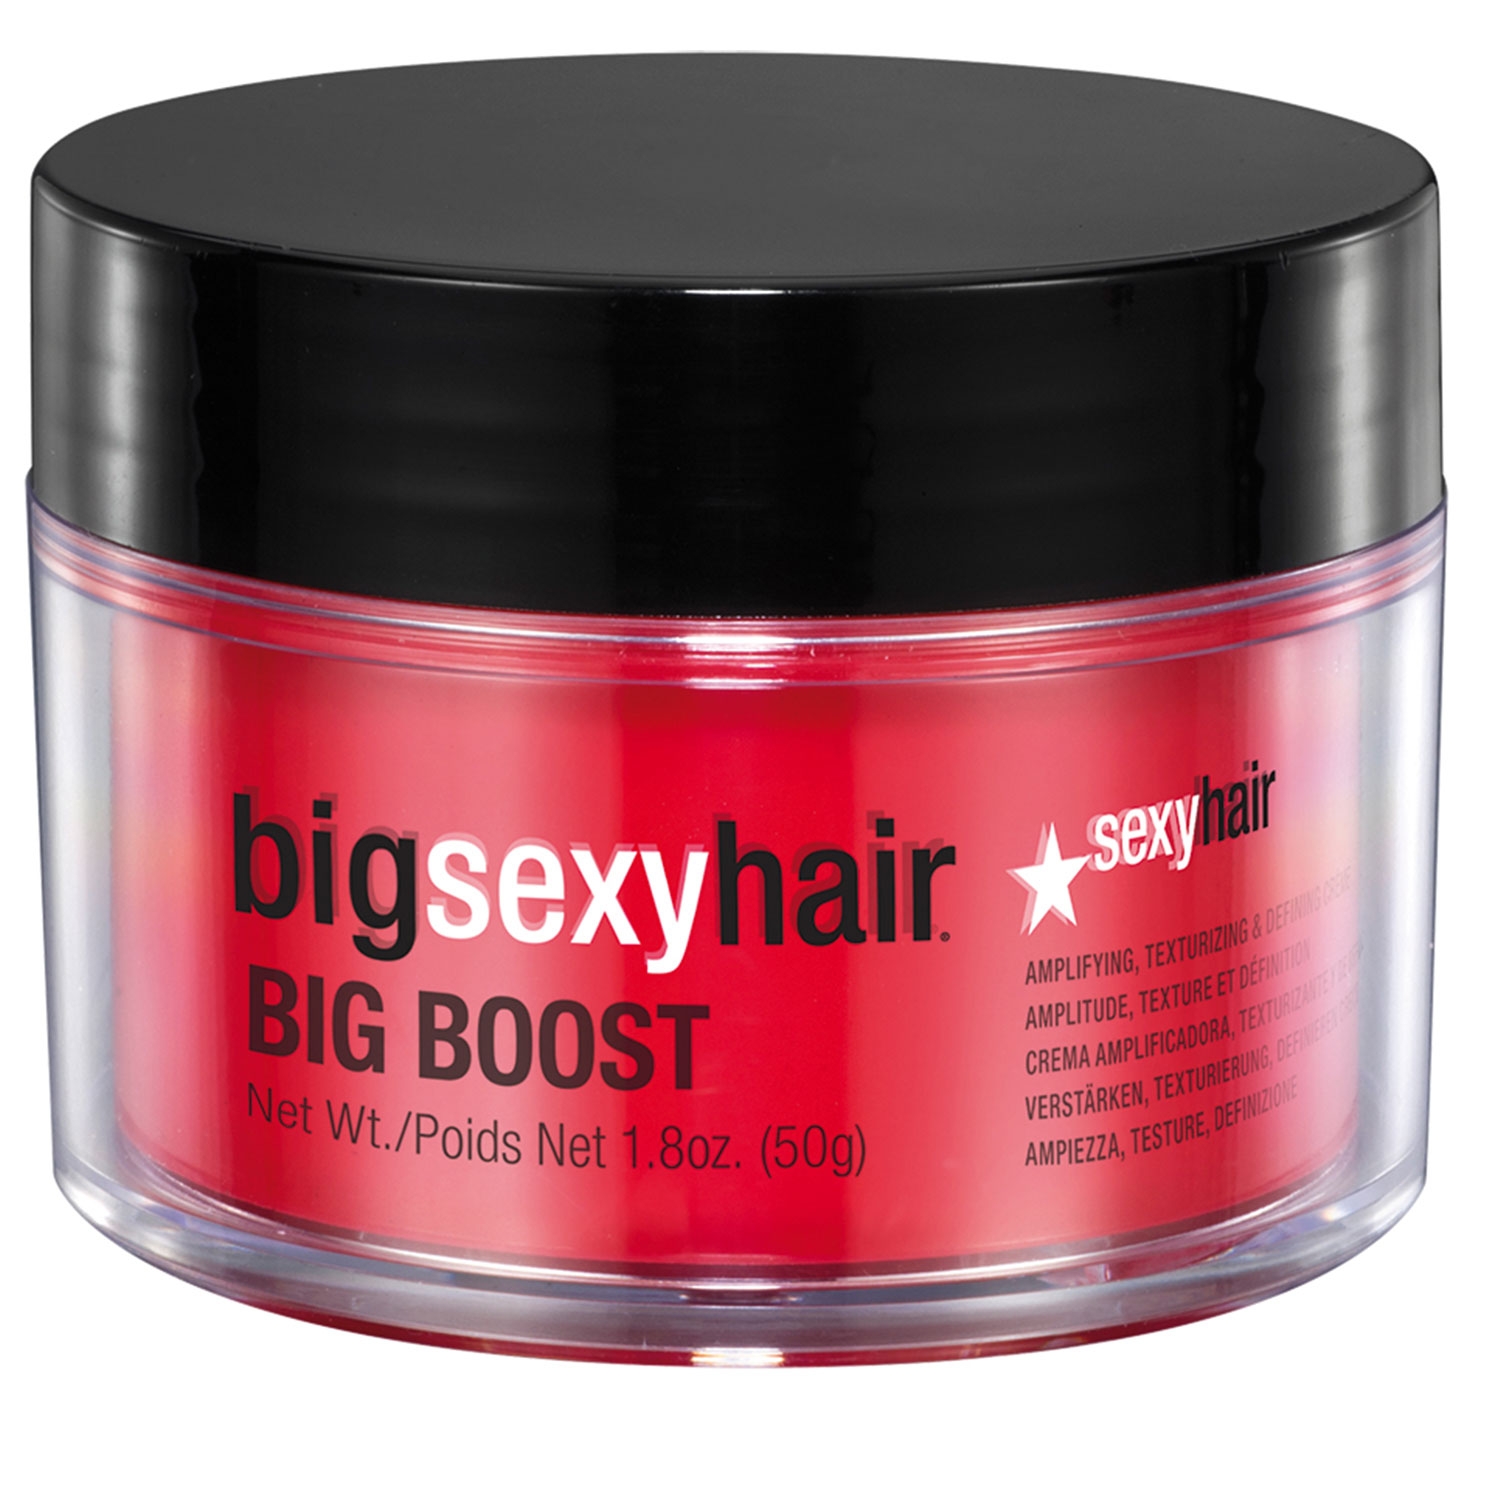 Image du produit de Big Sexy Hair - Big Boost